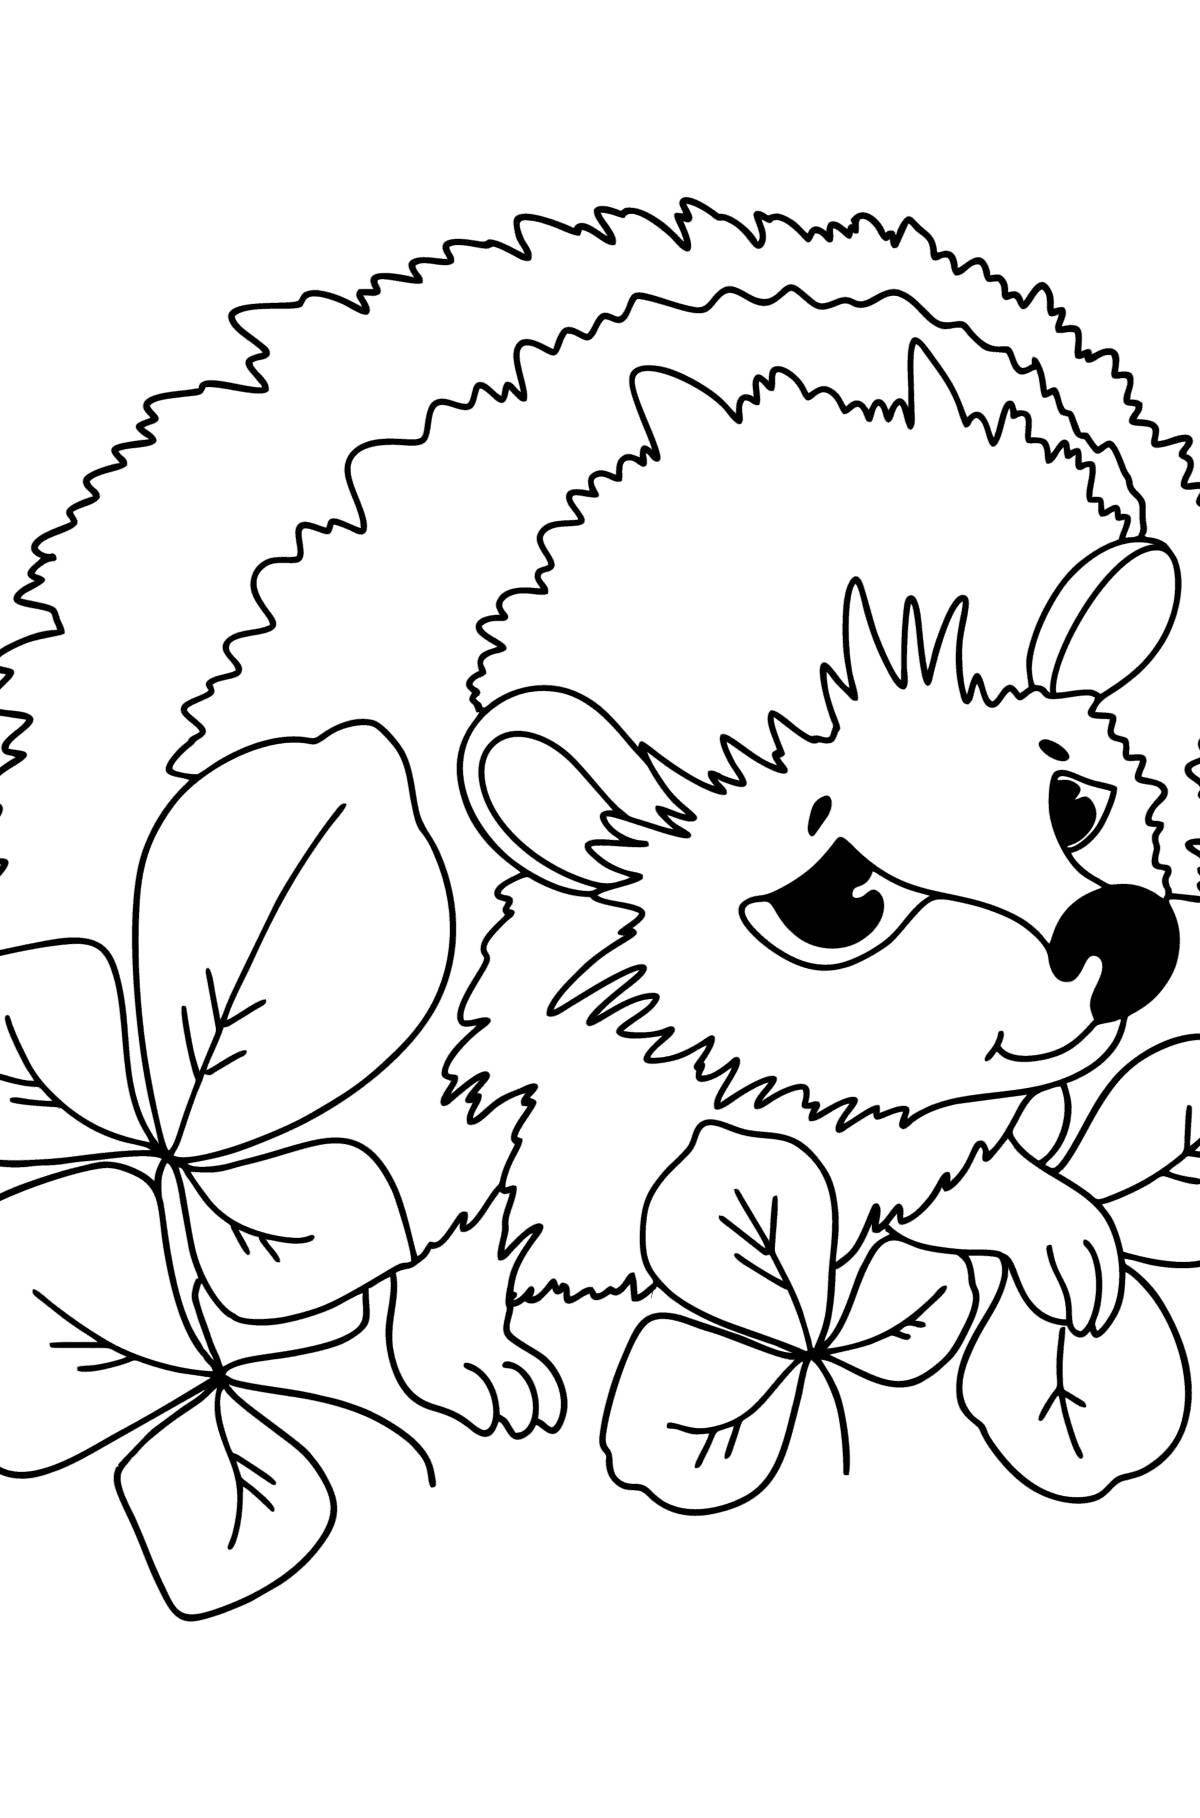 Grinning eared hedgehog coloring book